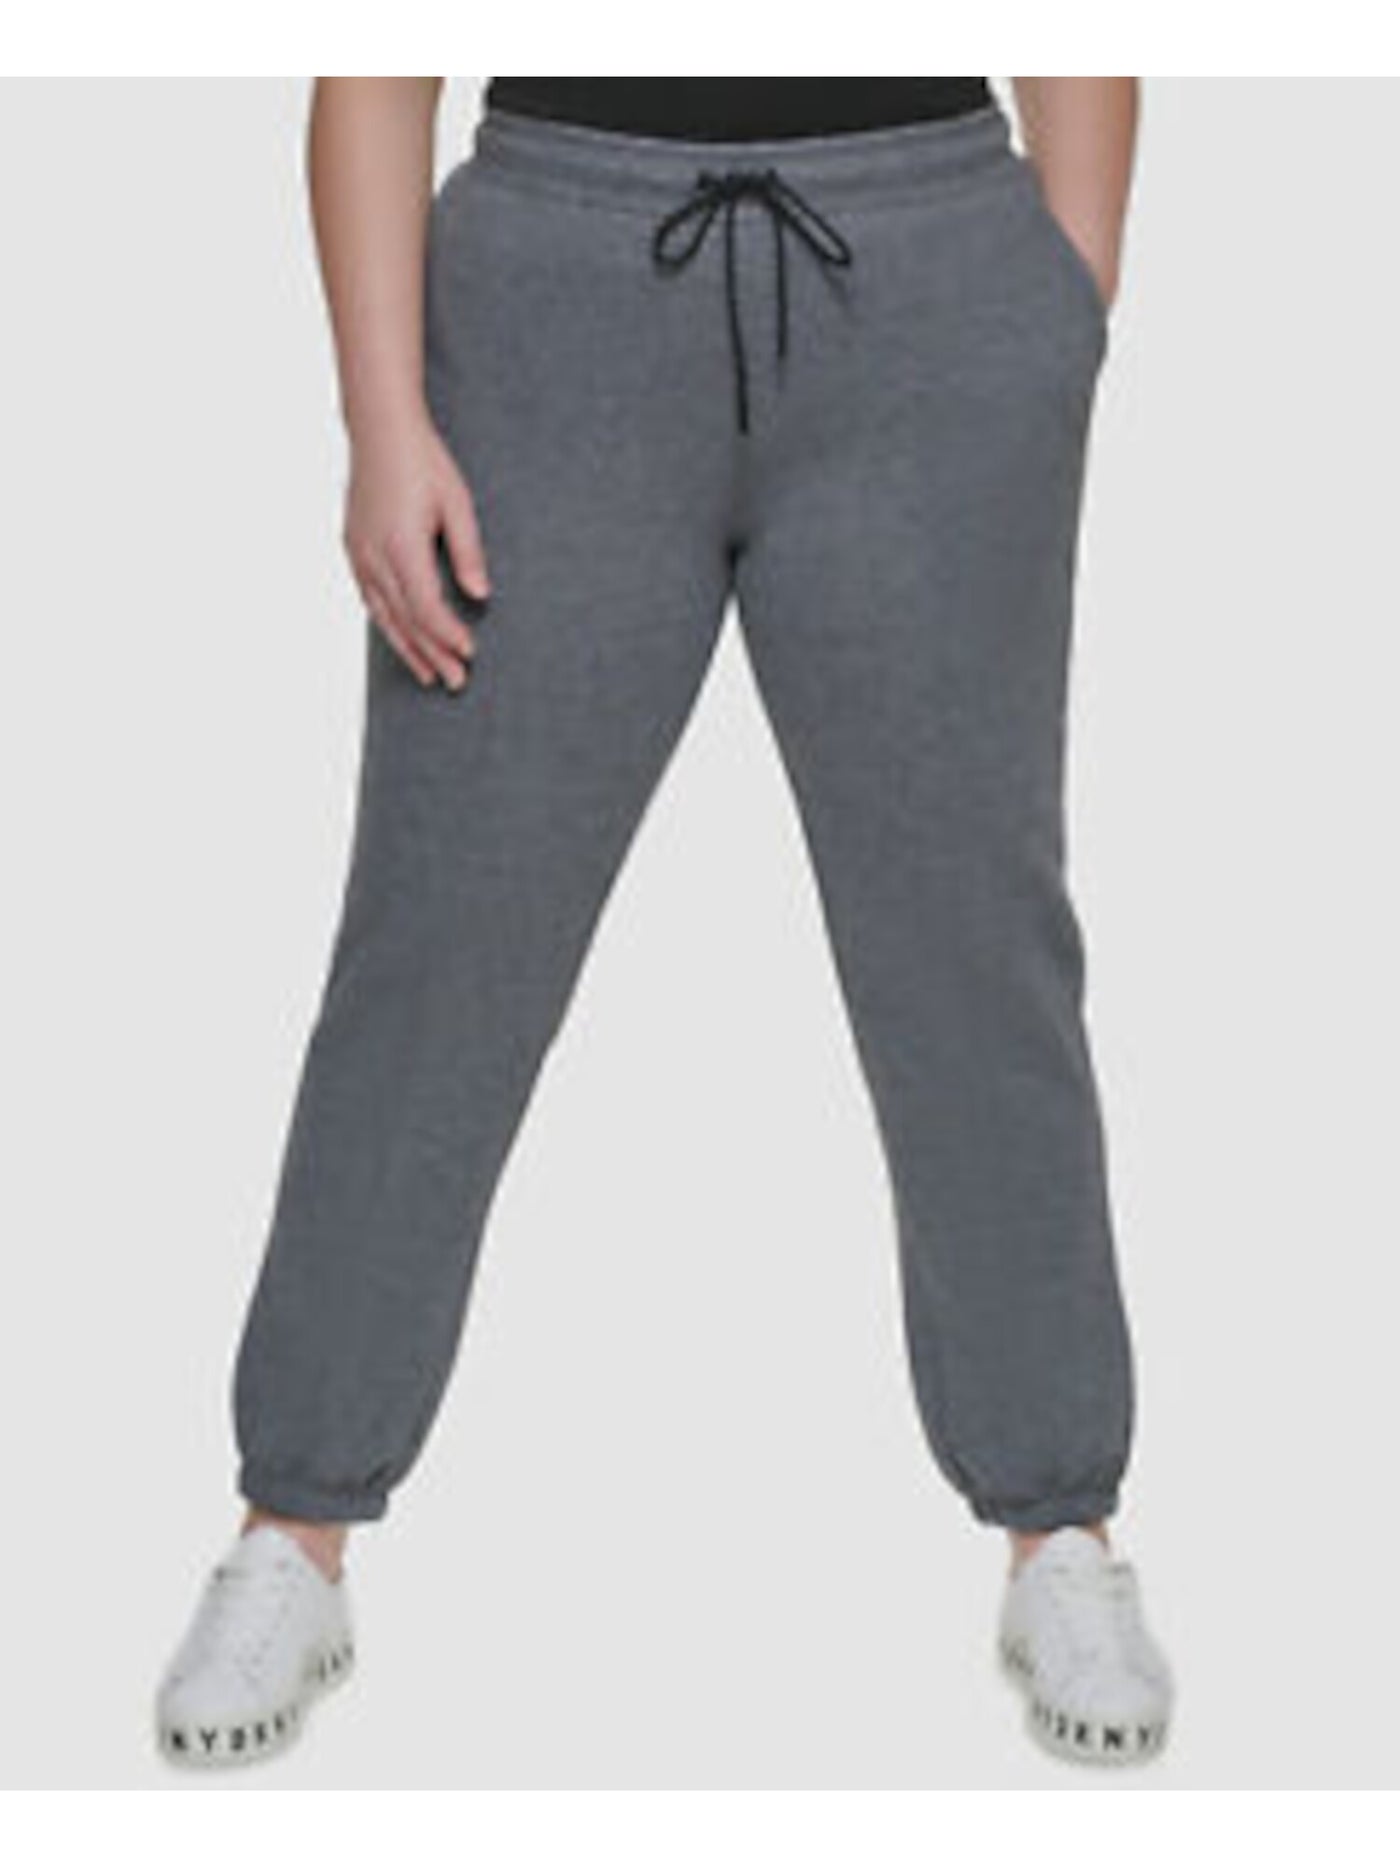 DKNY SPORT Womens Gray Fleece Pocketed Drawstring Pintucked Jogger Heather Active Wear High Waist Pants Plus 3X